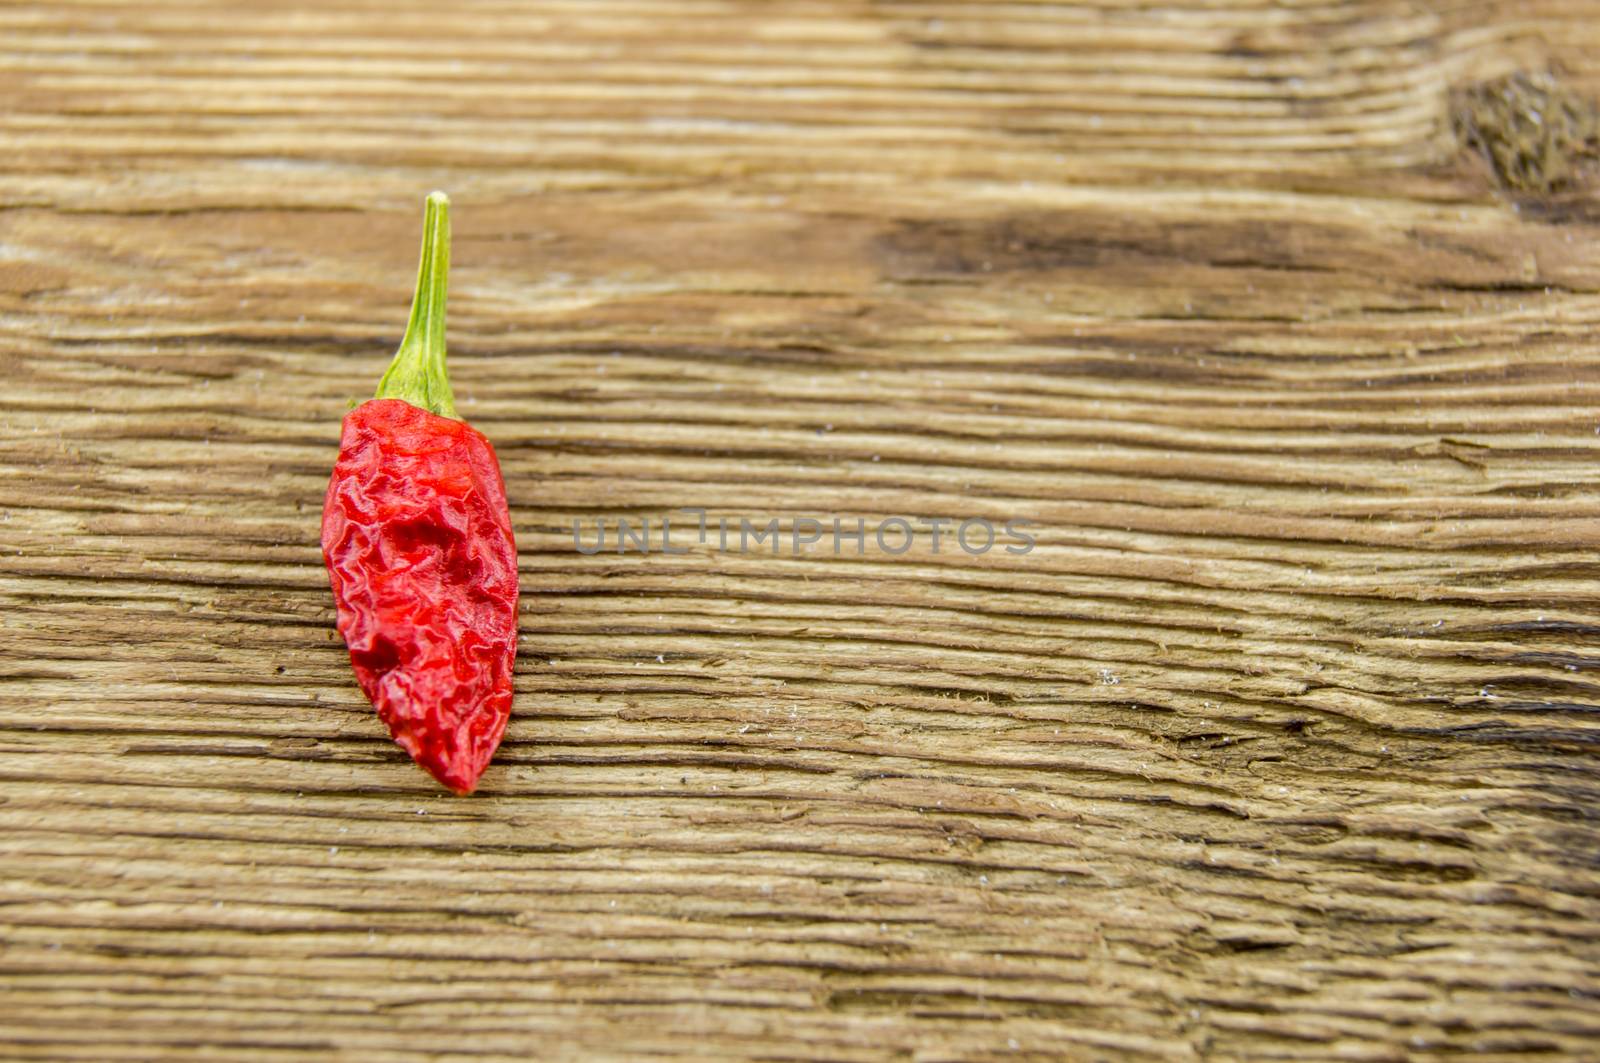 chili pepper on wood background by serhii_lohvyniuk